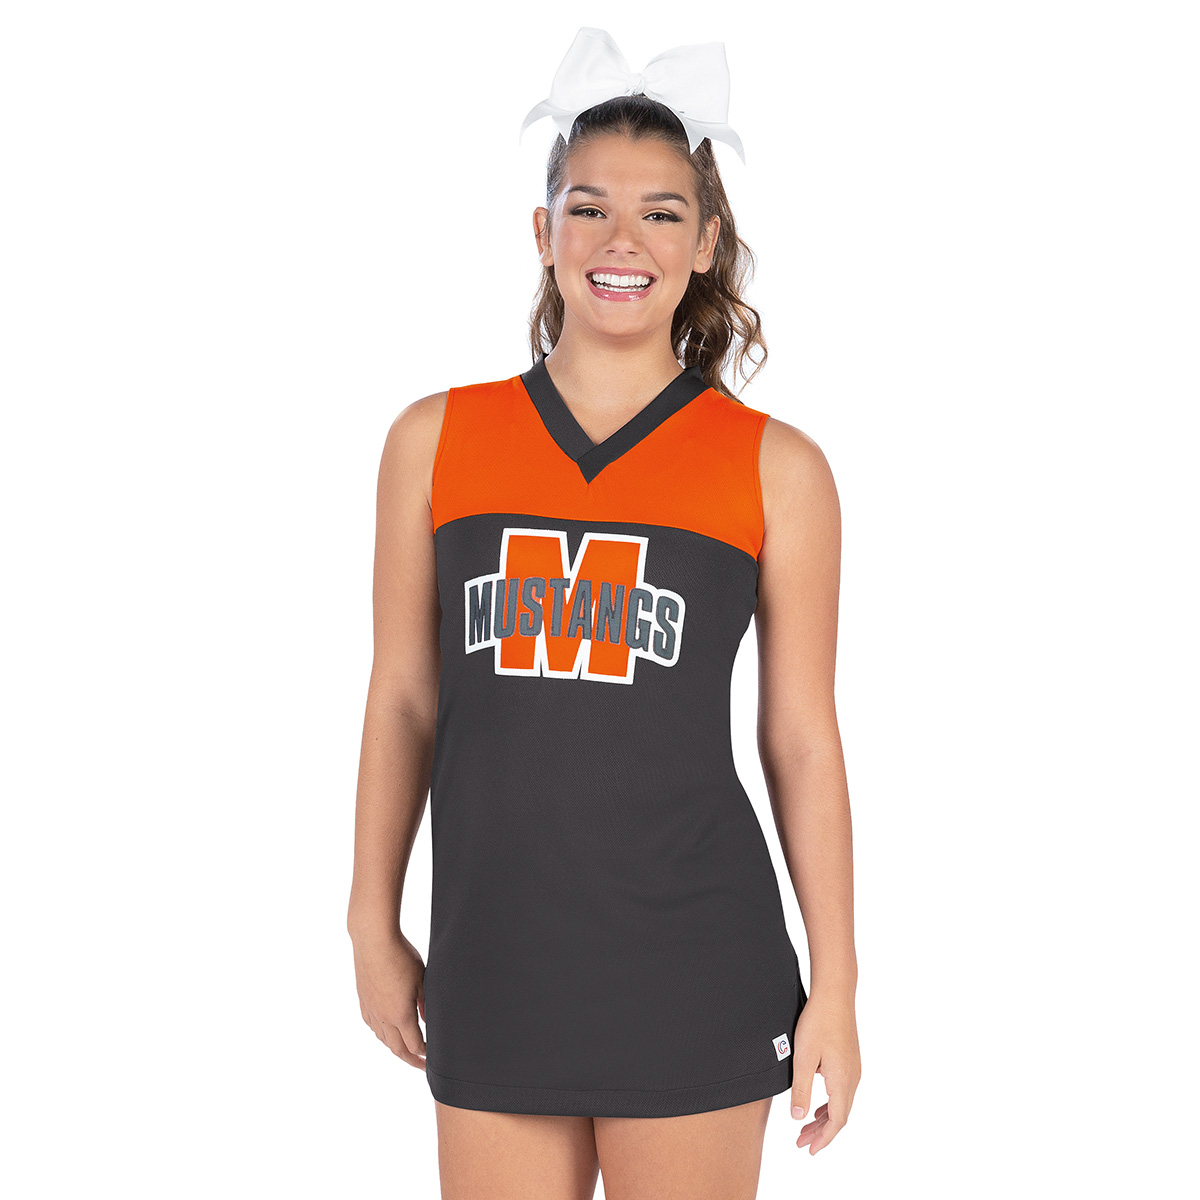 Cheer Uniform Spirit Pack 6 - Bow-to-Toe